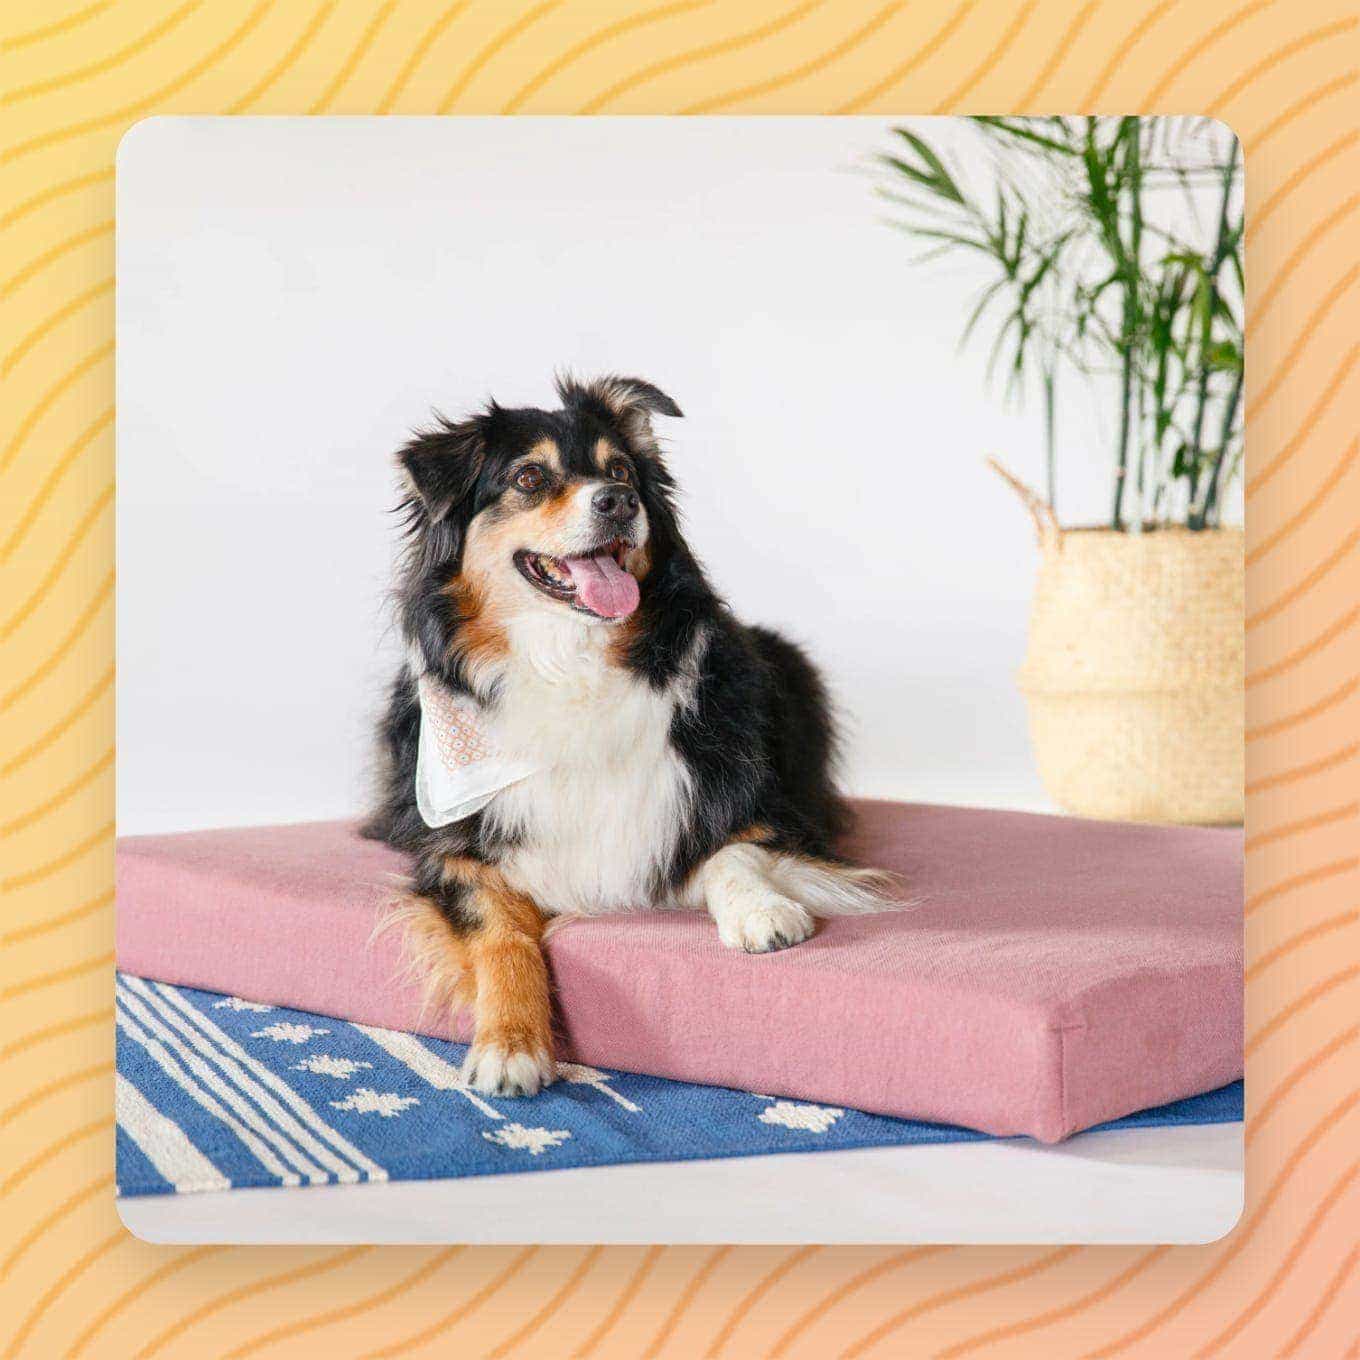 A dog sits on a mattress-shaped dog bed from Avocado Green Mattress